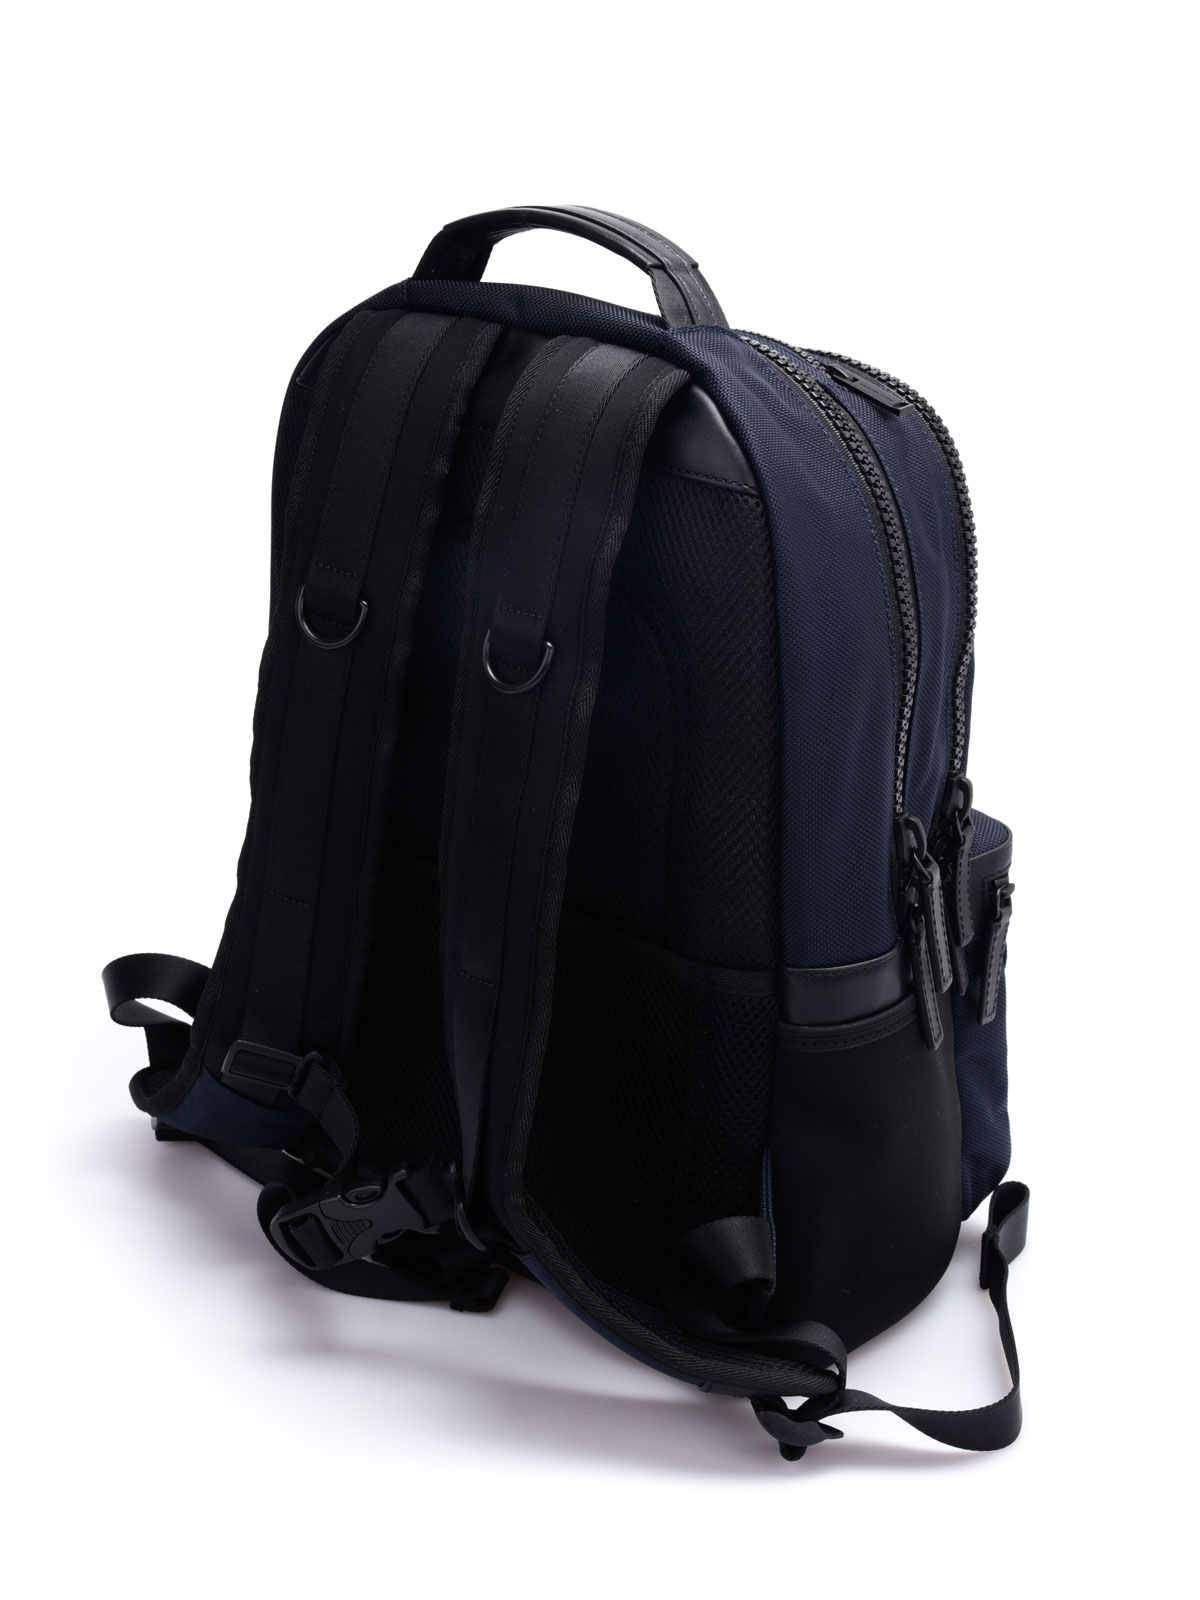 Shop Michael Kors Men's Backpacks